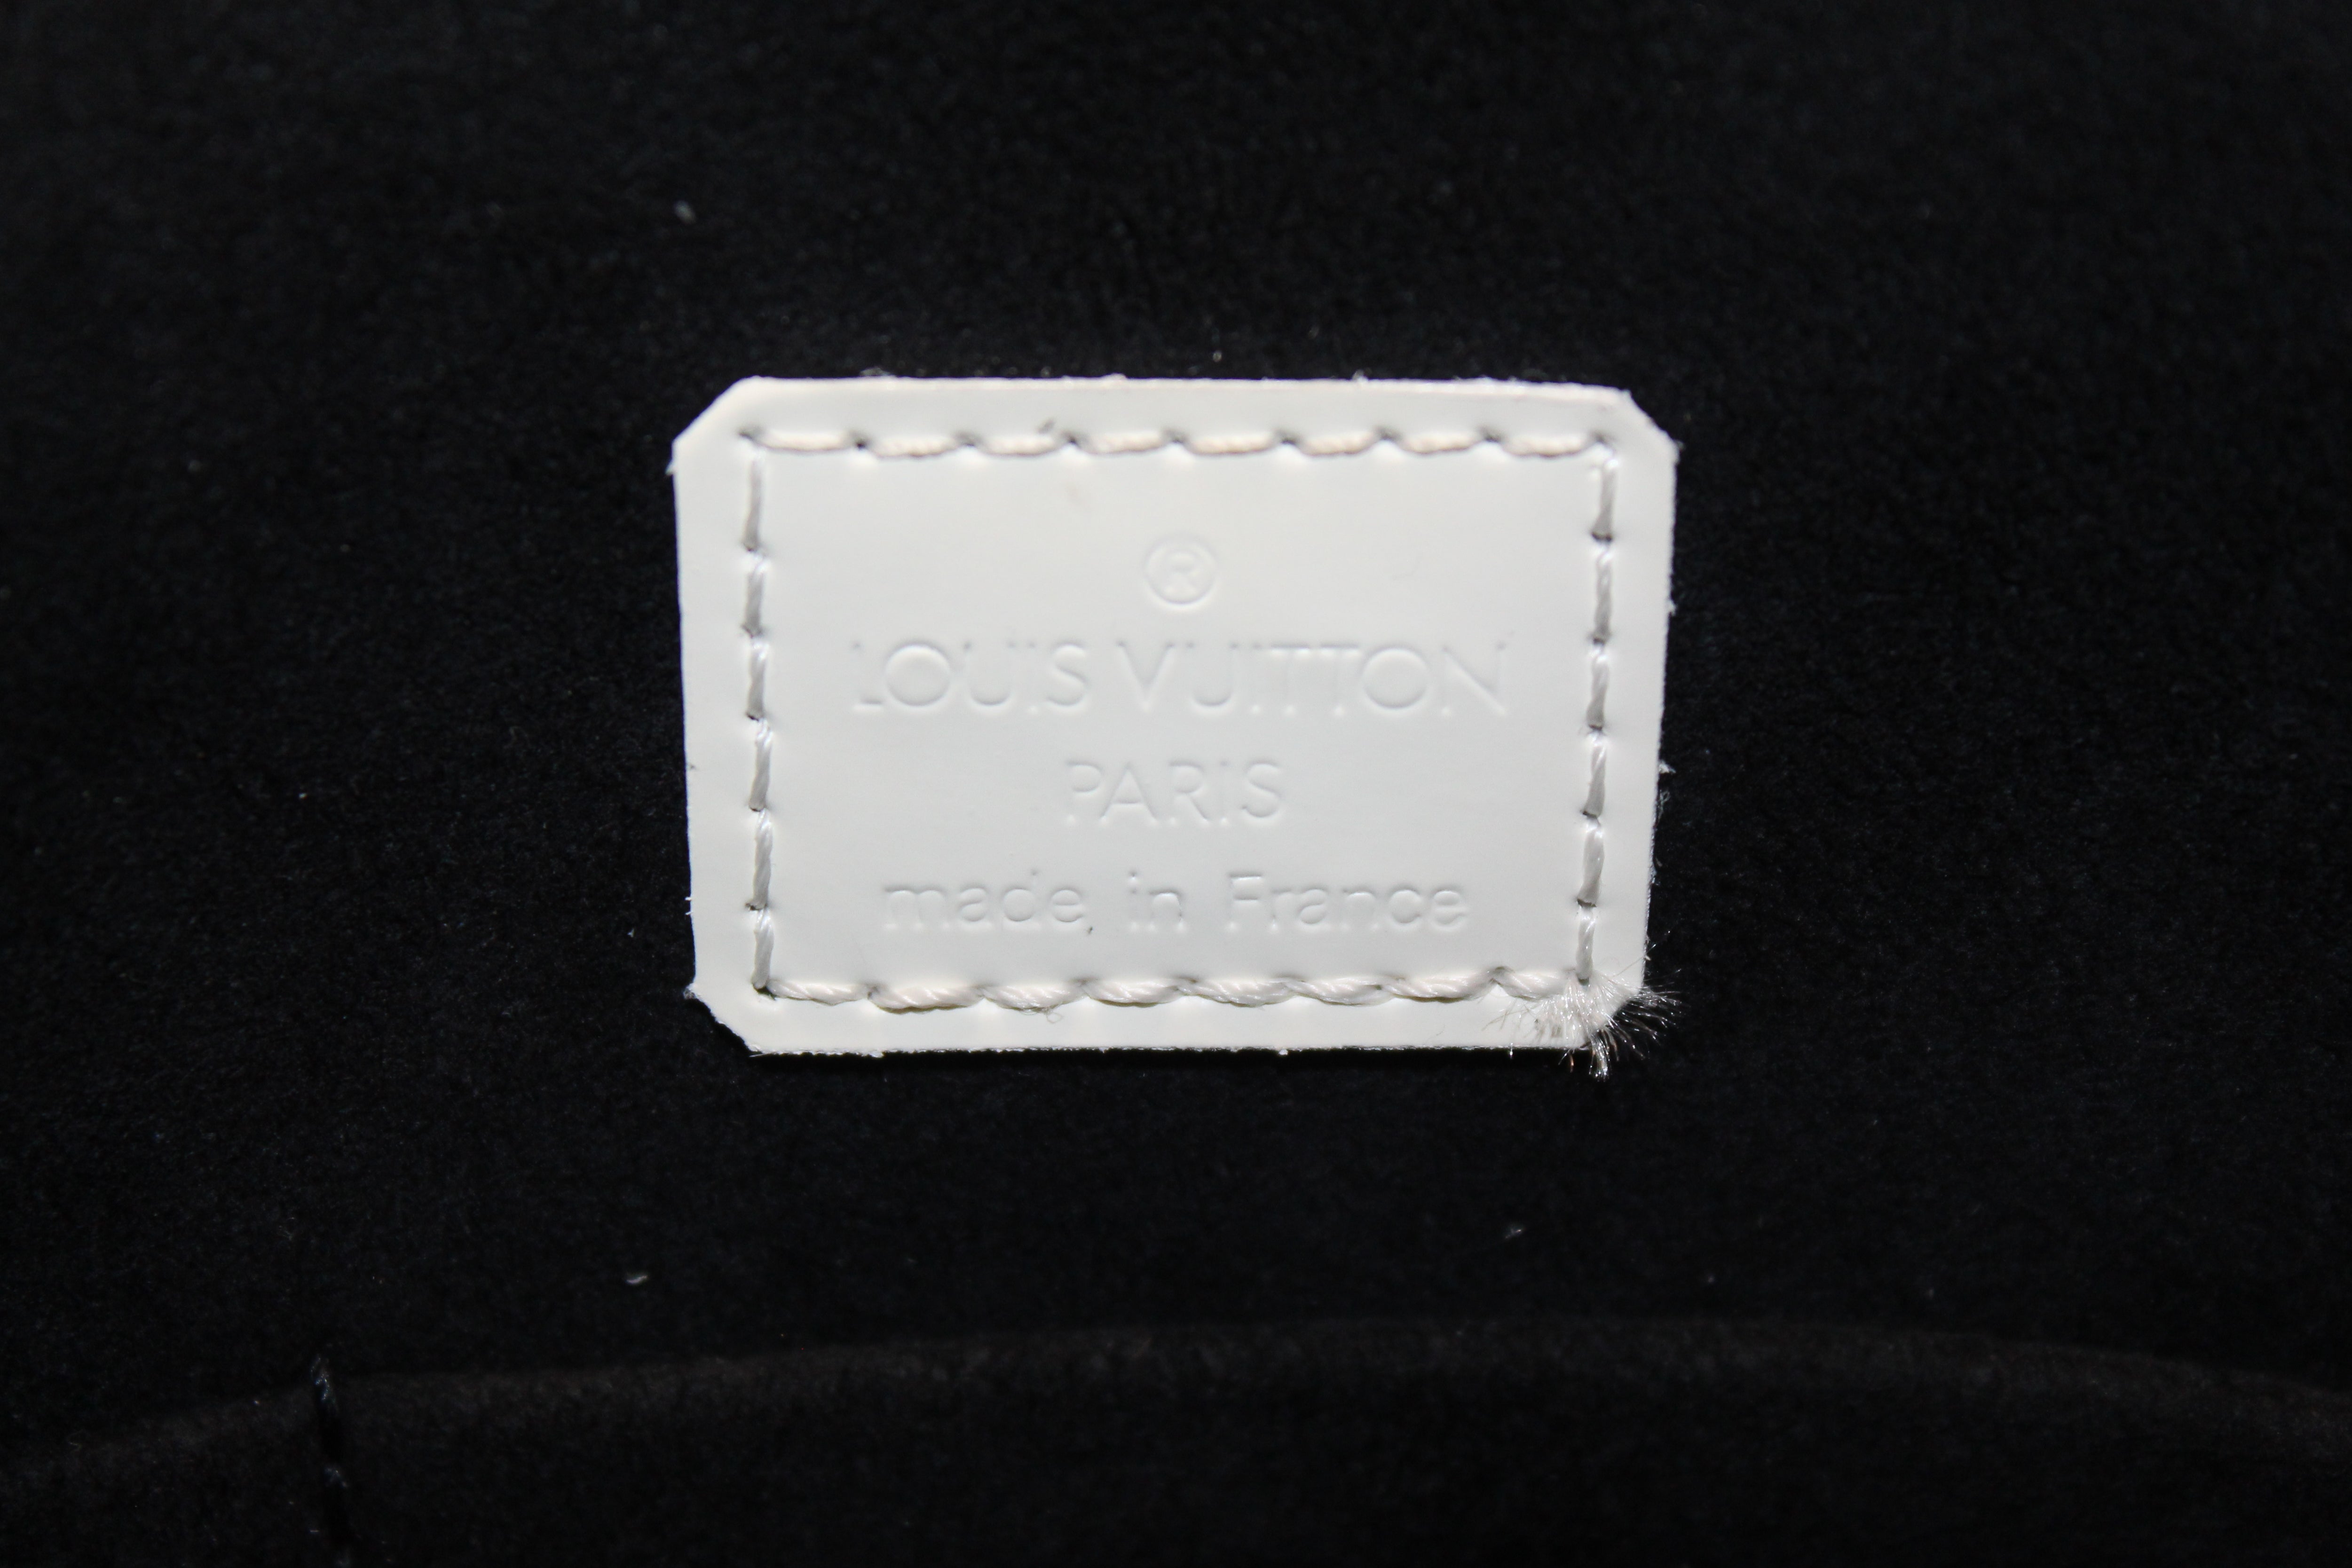 Louis Vuitton Limited Edition Black Glazed Leather Alma Graffiti MM - SOLD